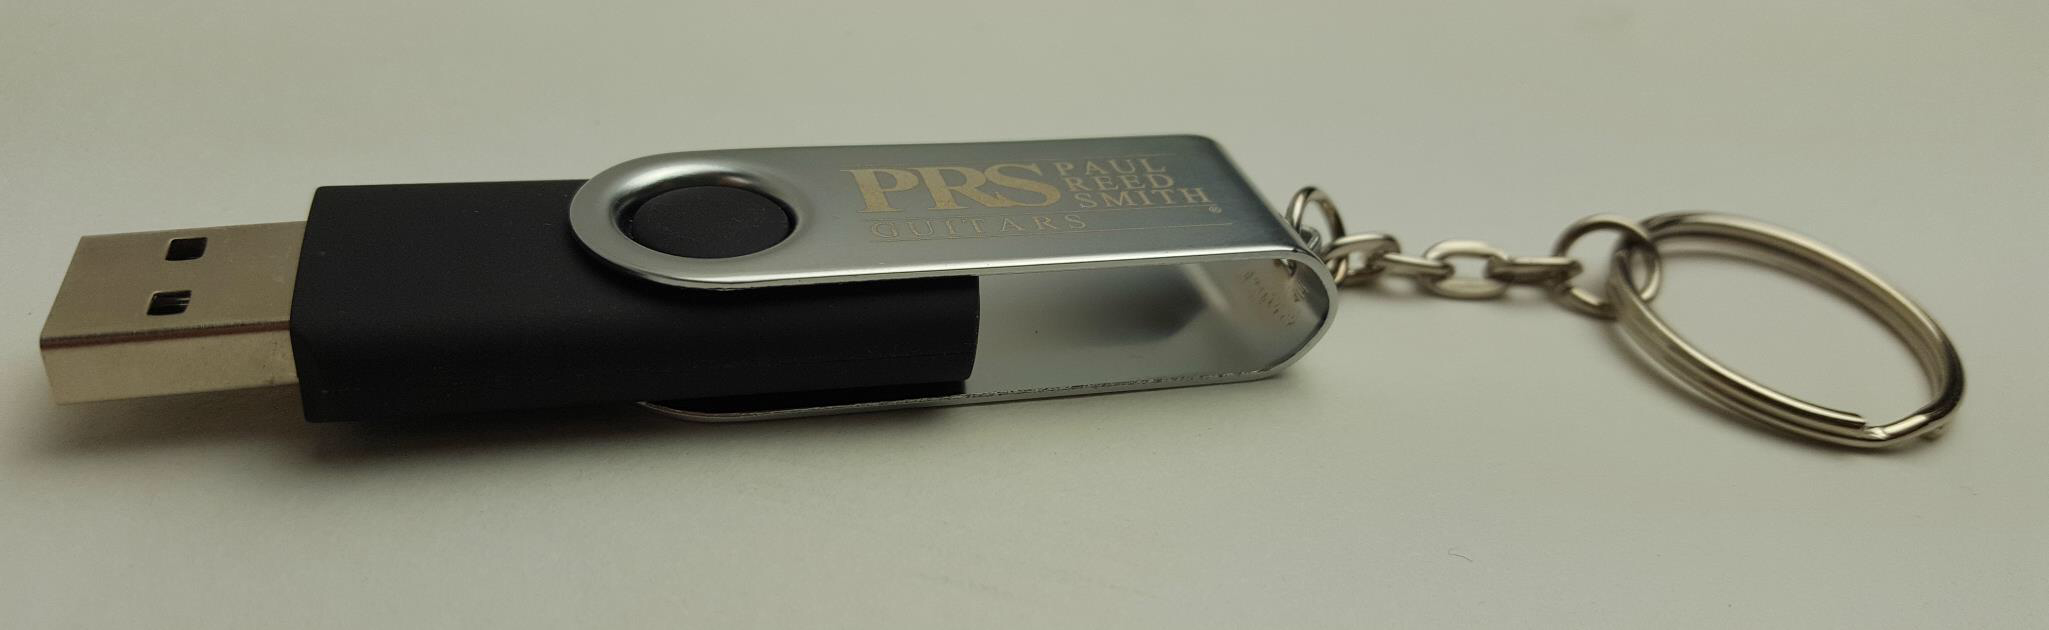  PRS USB Schlüsselanhänger  PRS-USBKEYRING  16 GB 